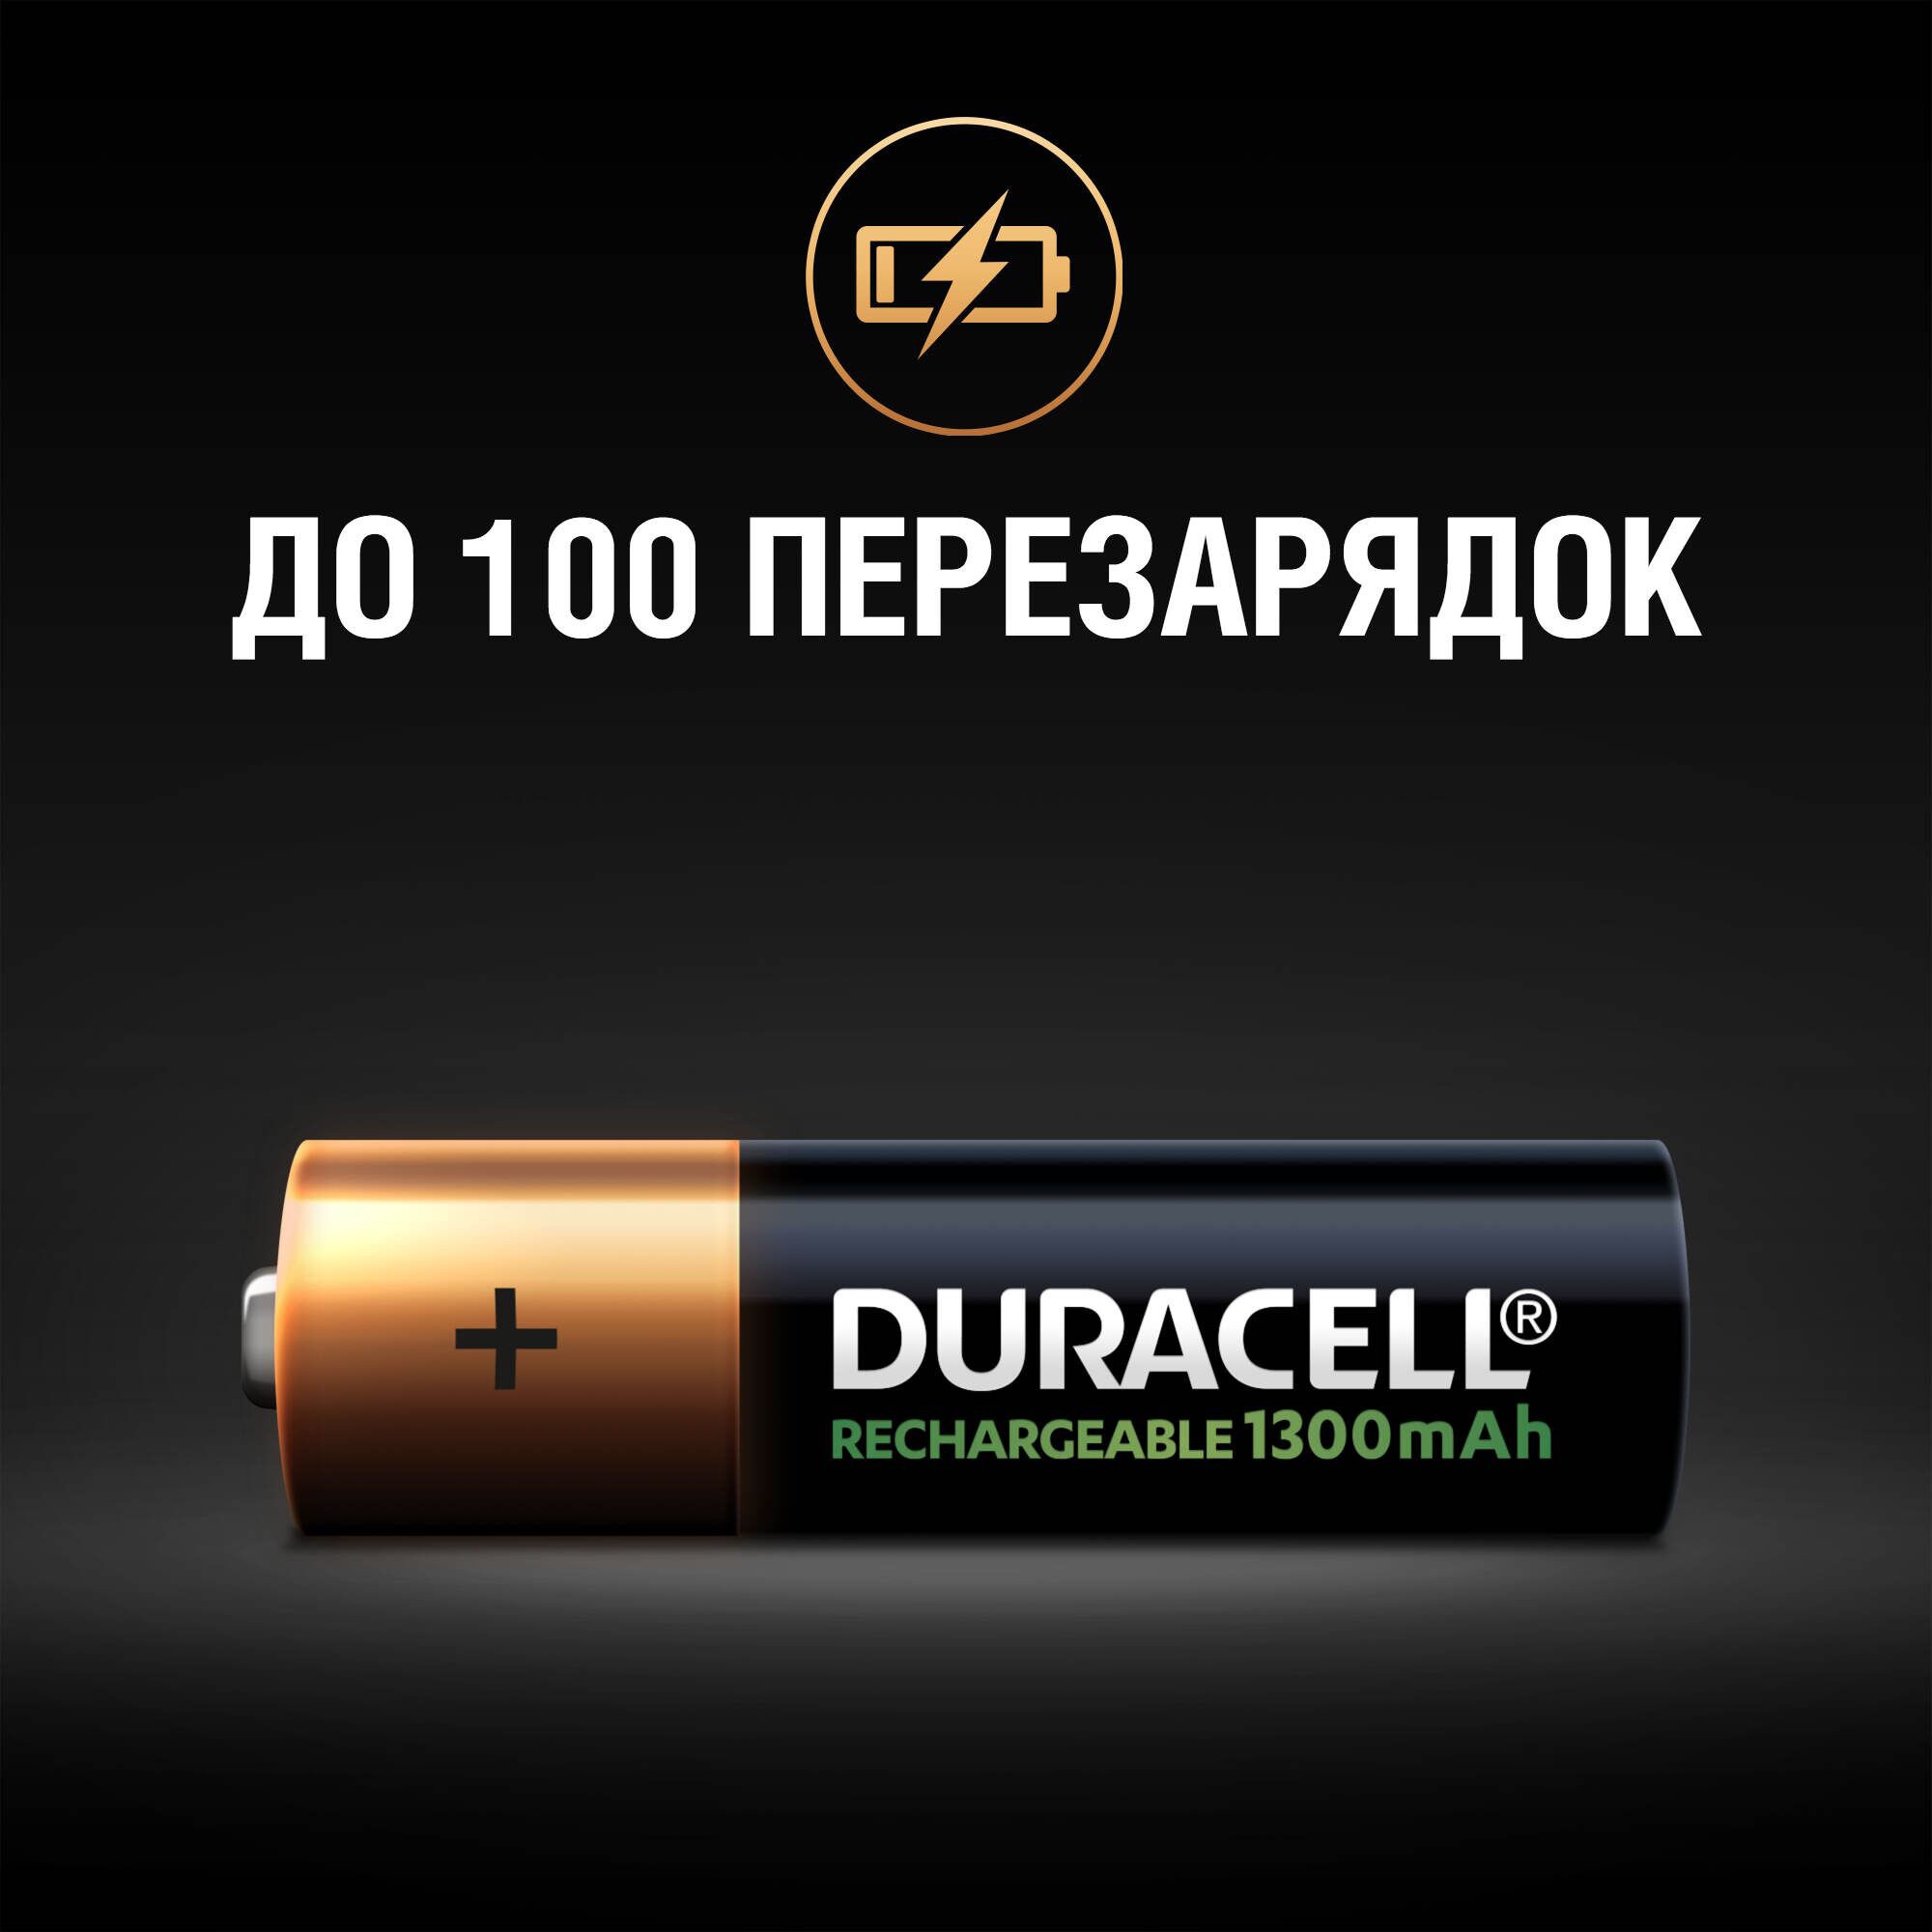 продаём Duracell Recharge AA 1300 mAh 4 шт. в Украине - фото 4